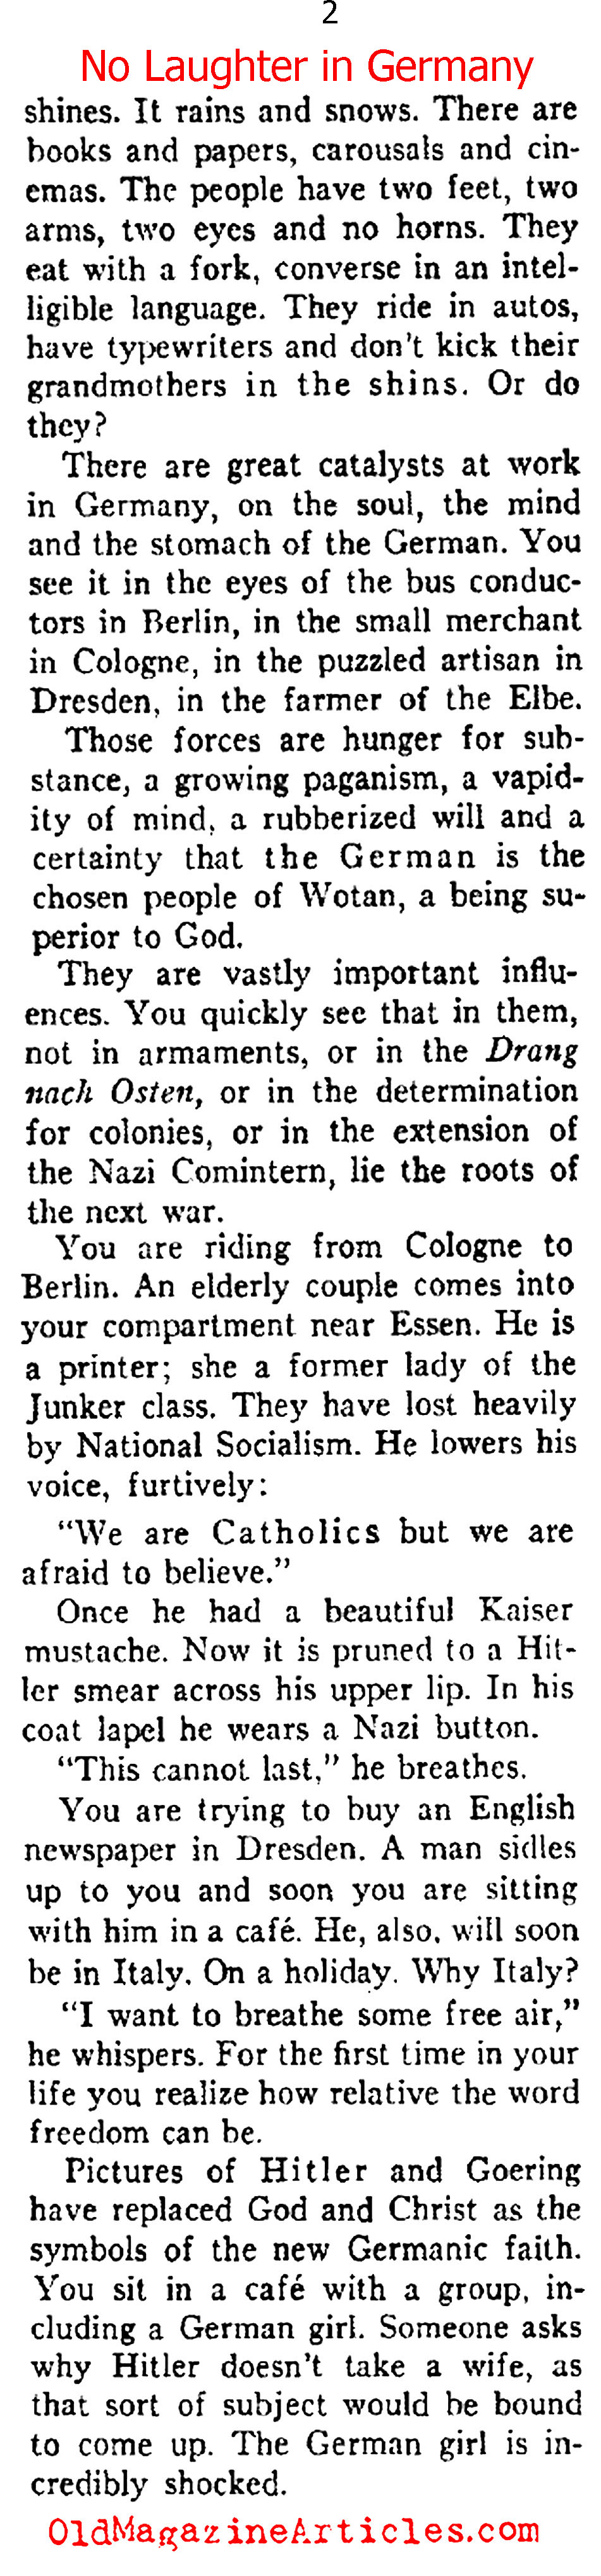 Gloom in Germany (Ken Magazine, 1938)